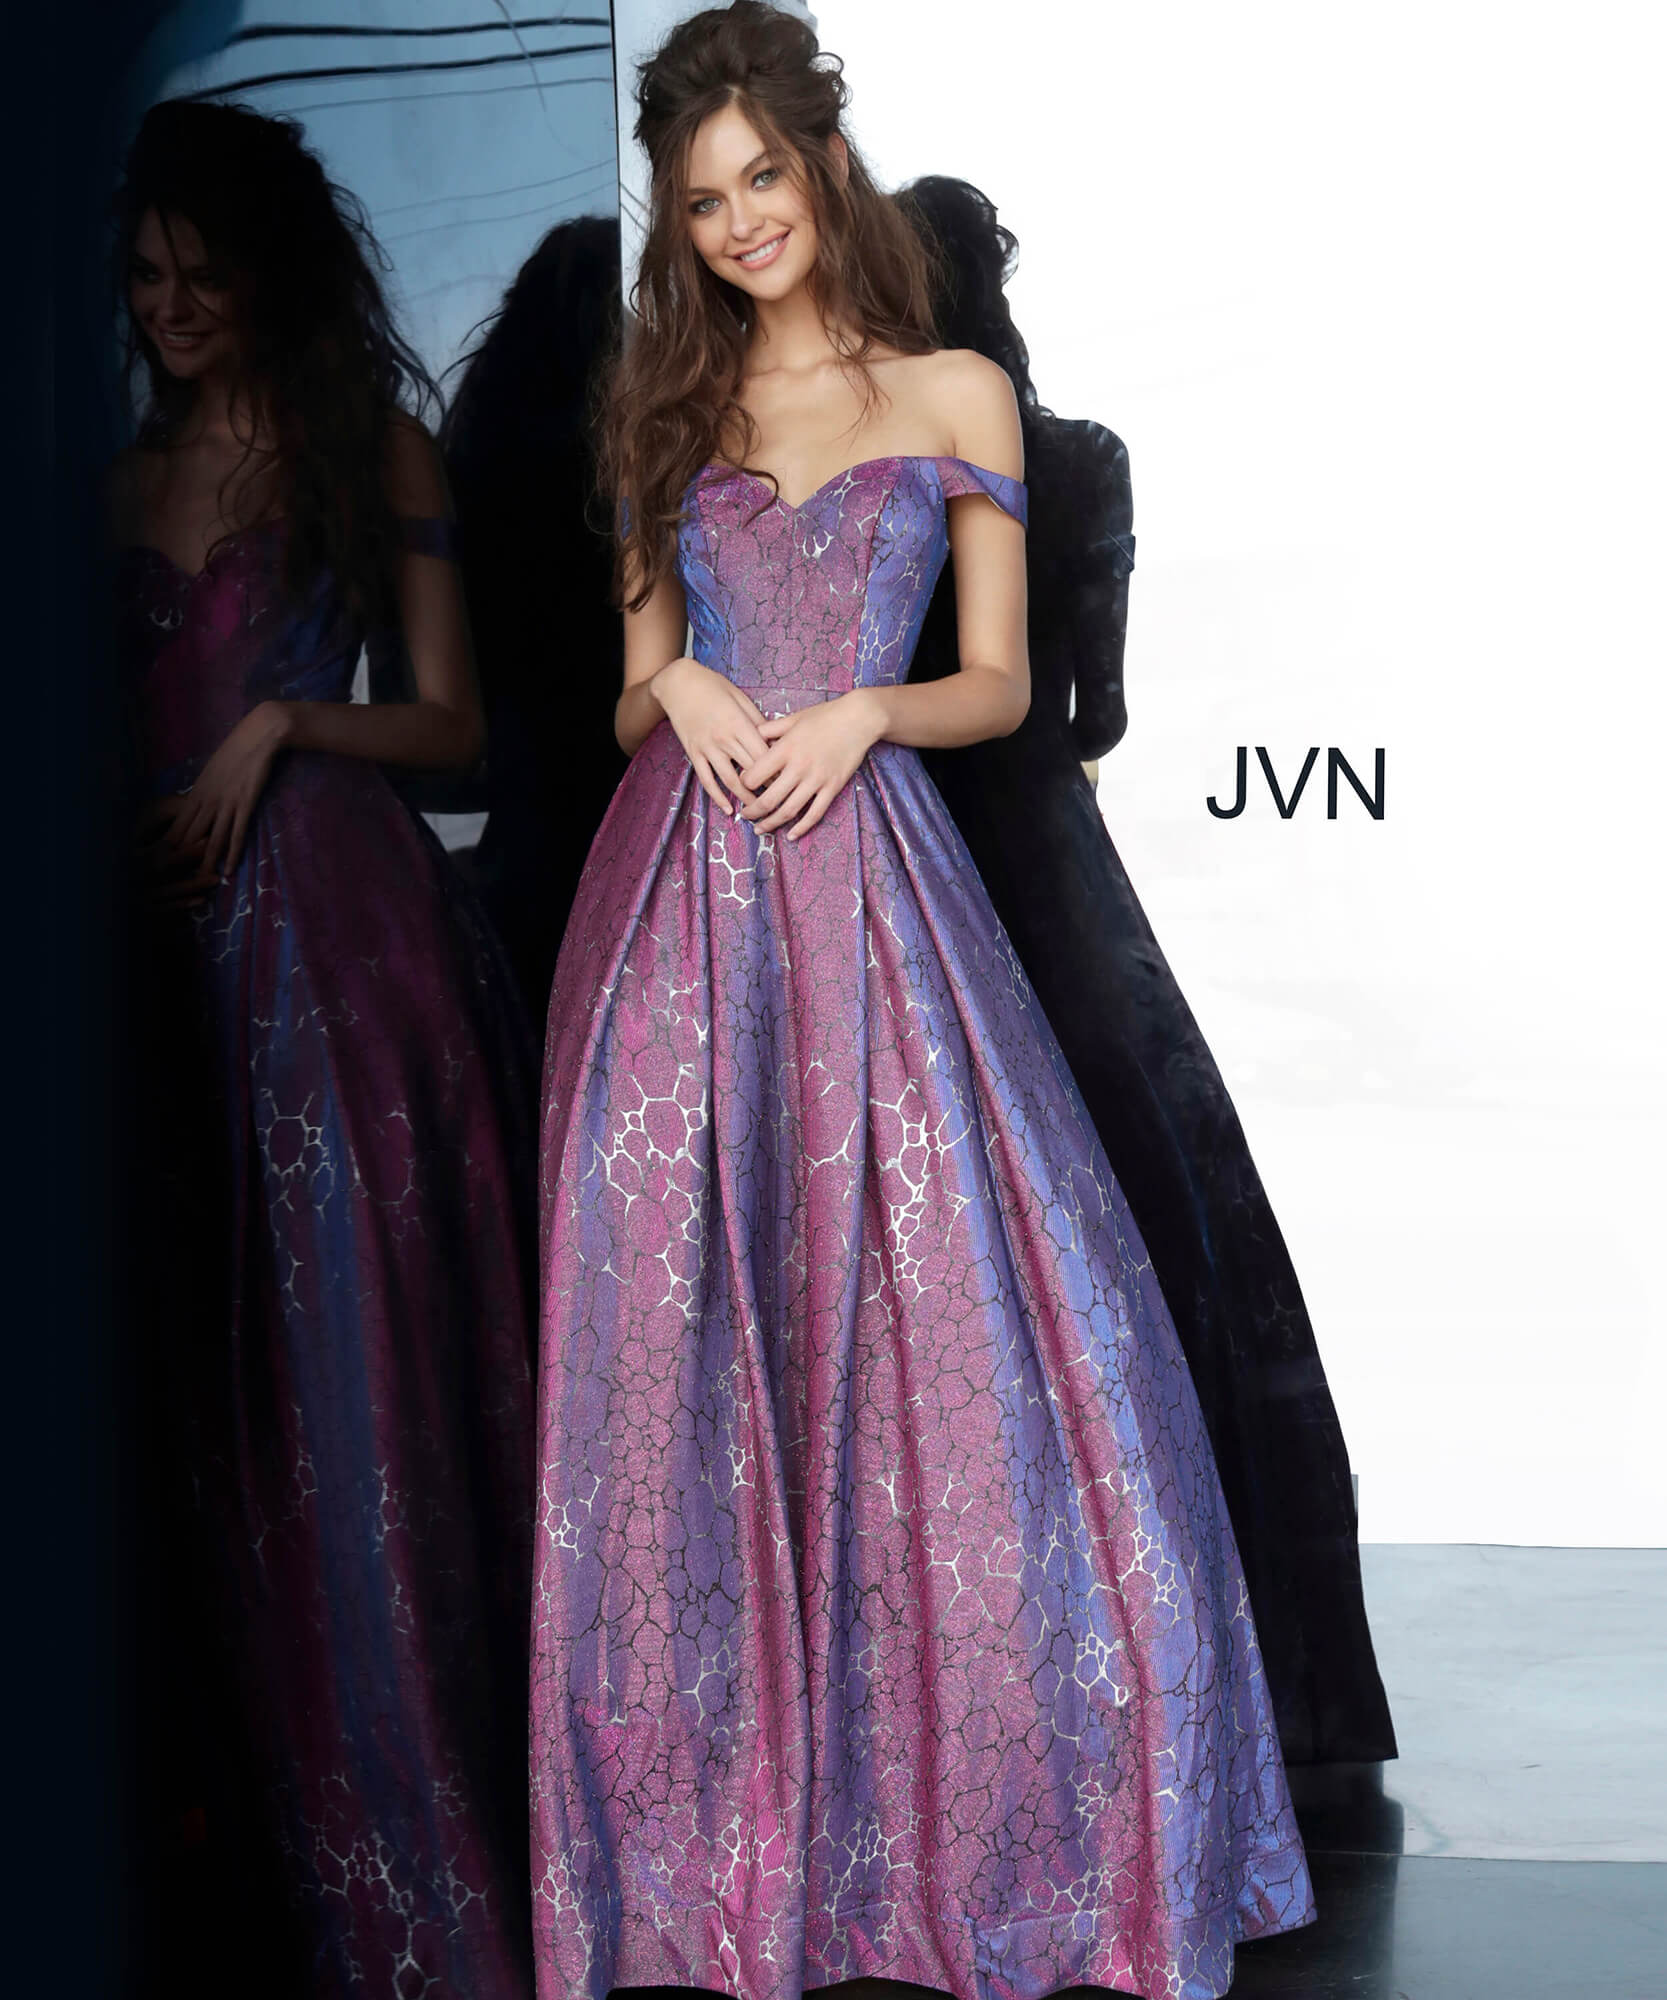 purple dress prom